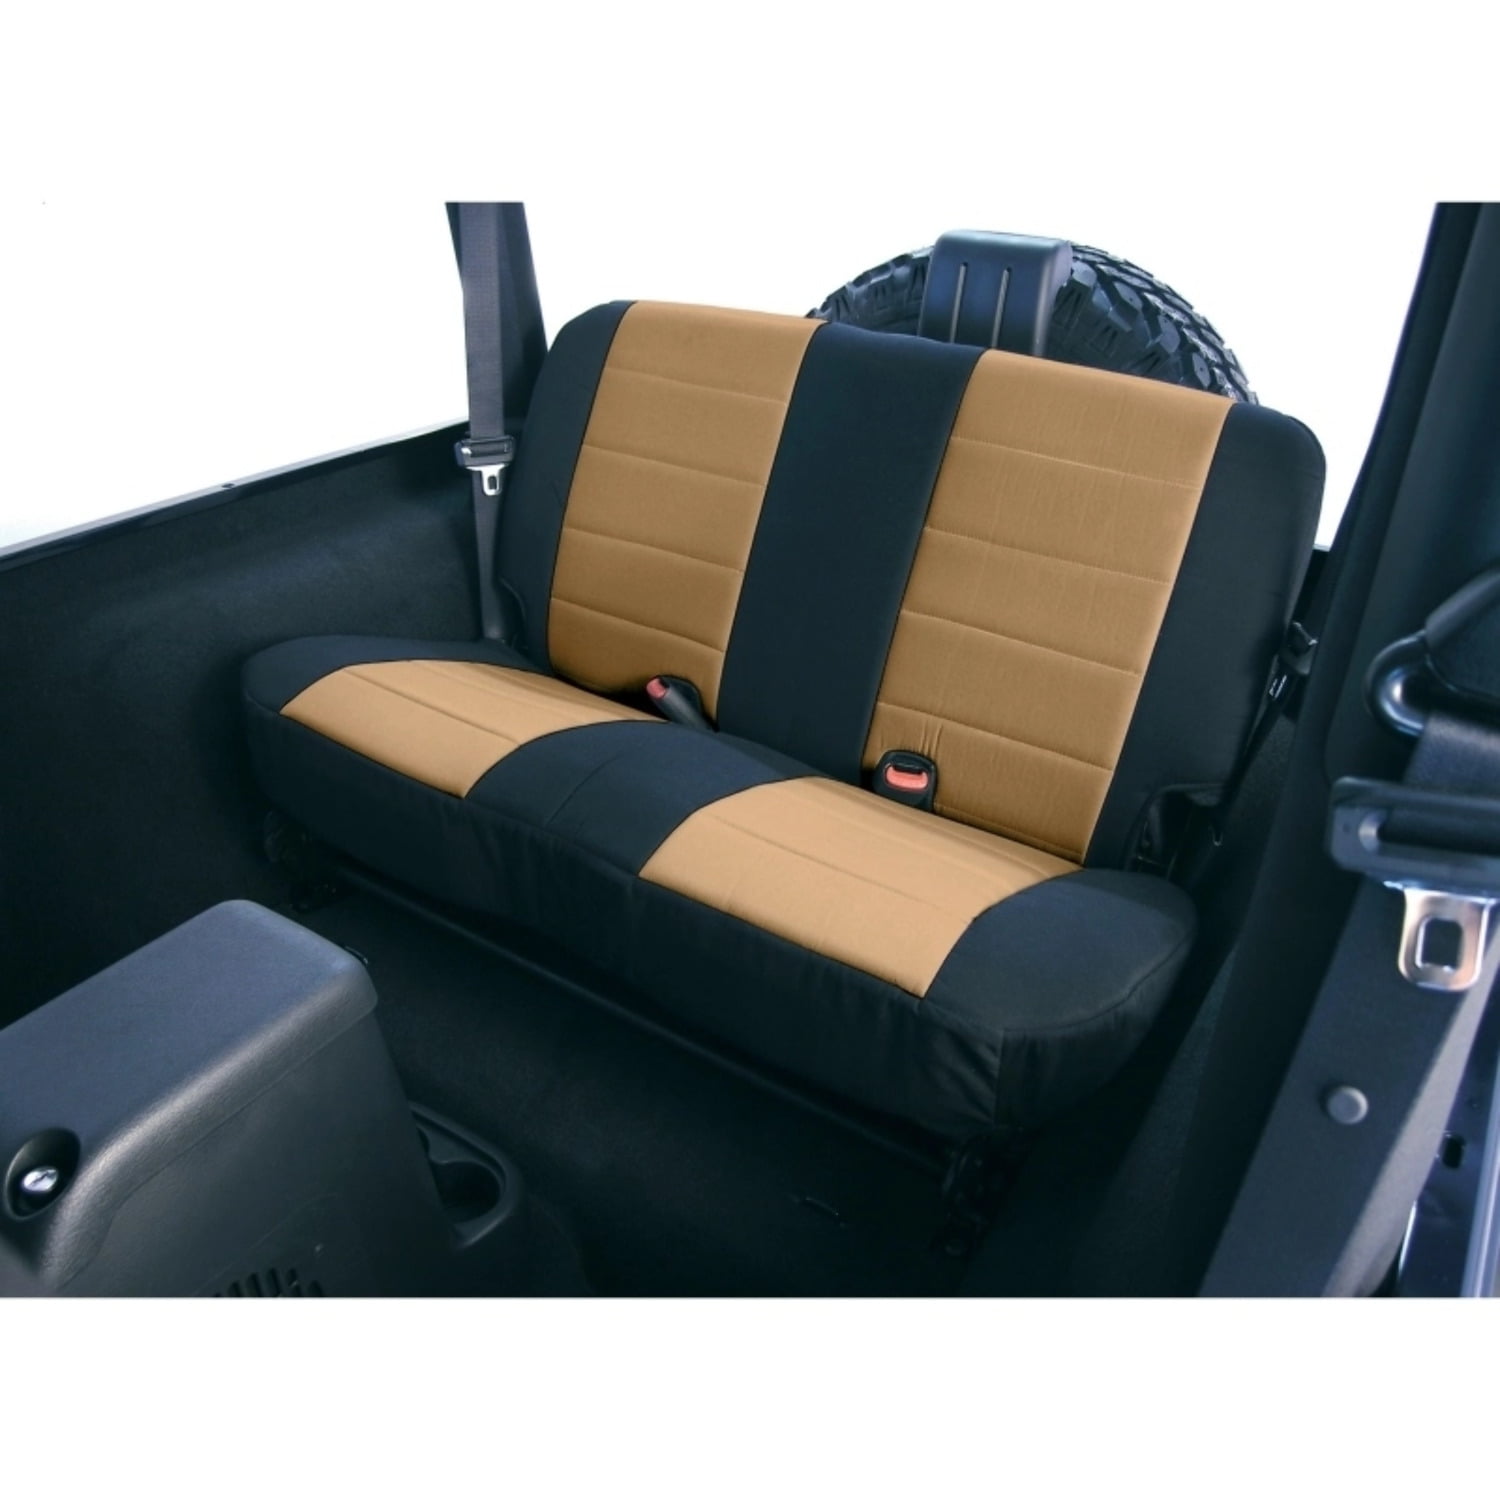 New For Jeep Wrangler Tj 97-02 Rear Neoprene Seat Cover Tan  X 13261.04